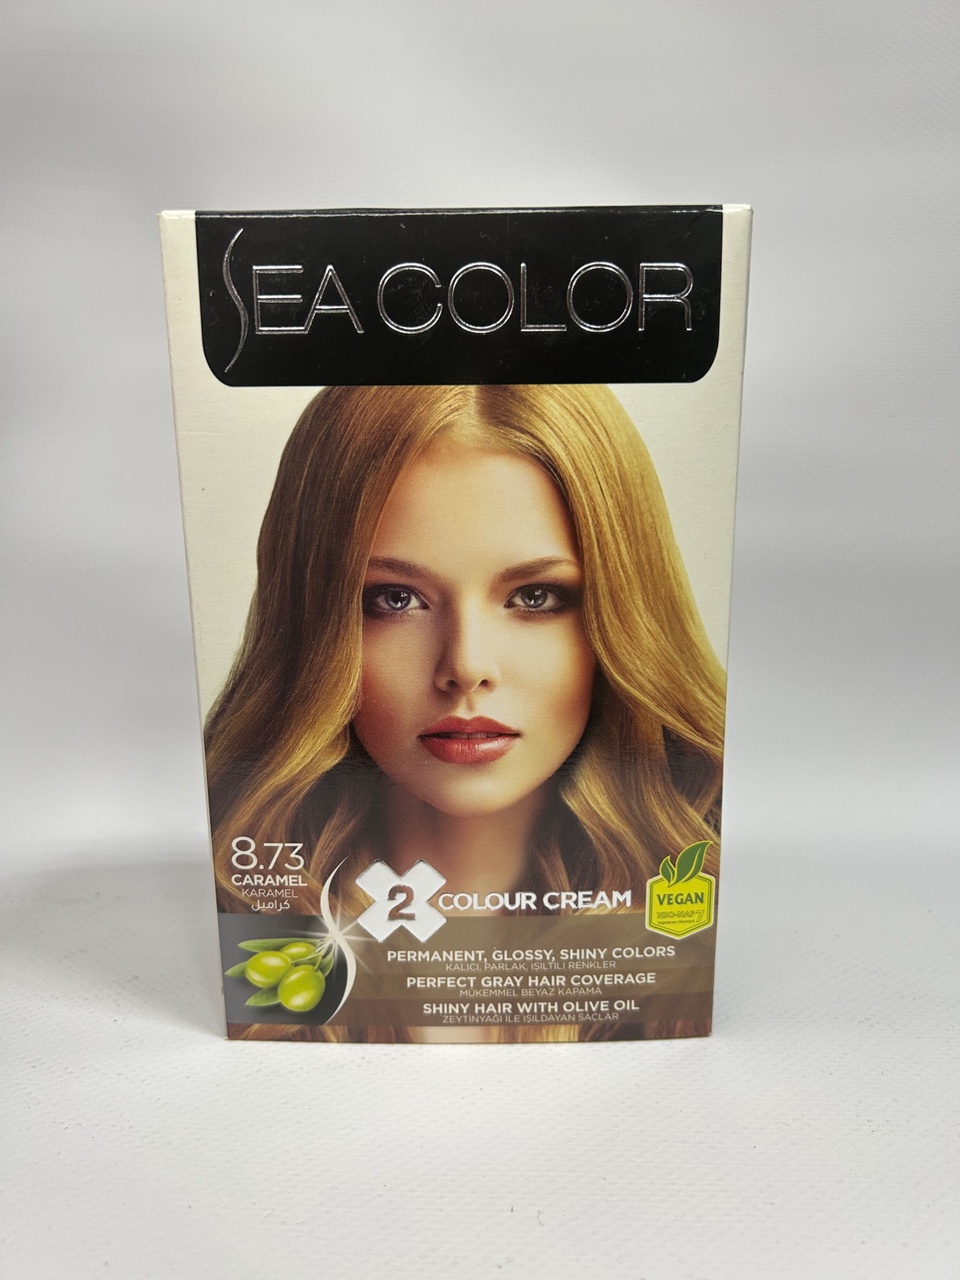 Sea Color 8.73 Краска д/волос «Карамель» - 300 ₽, заказать онлайн.